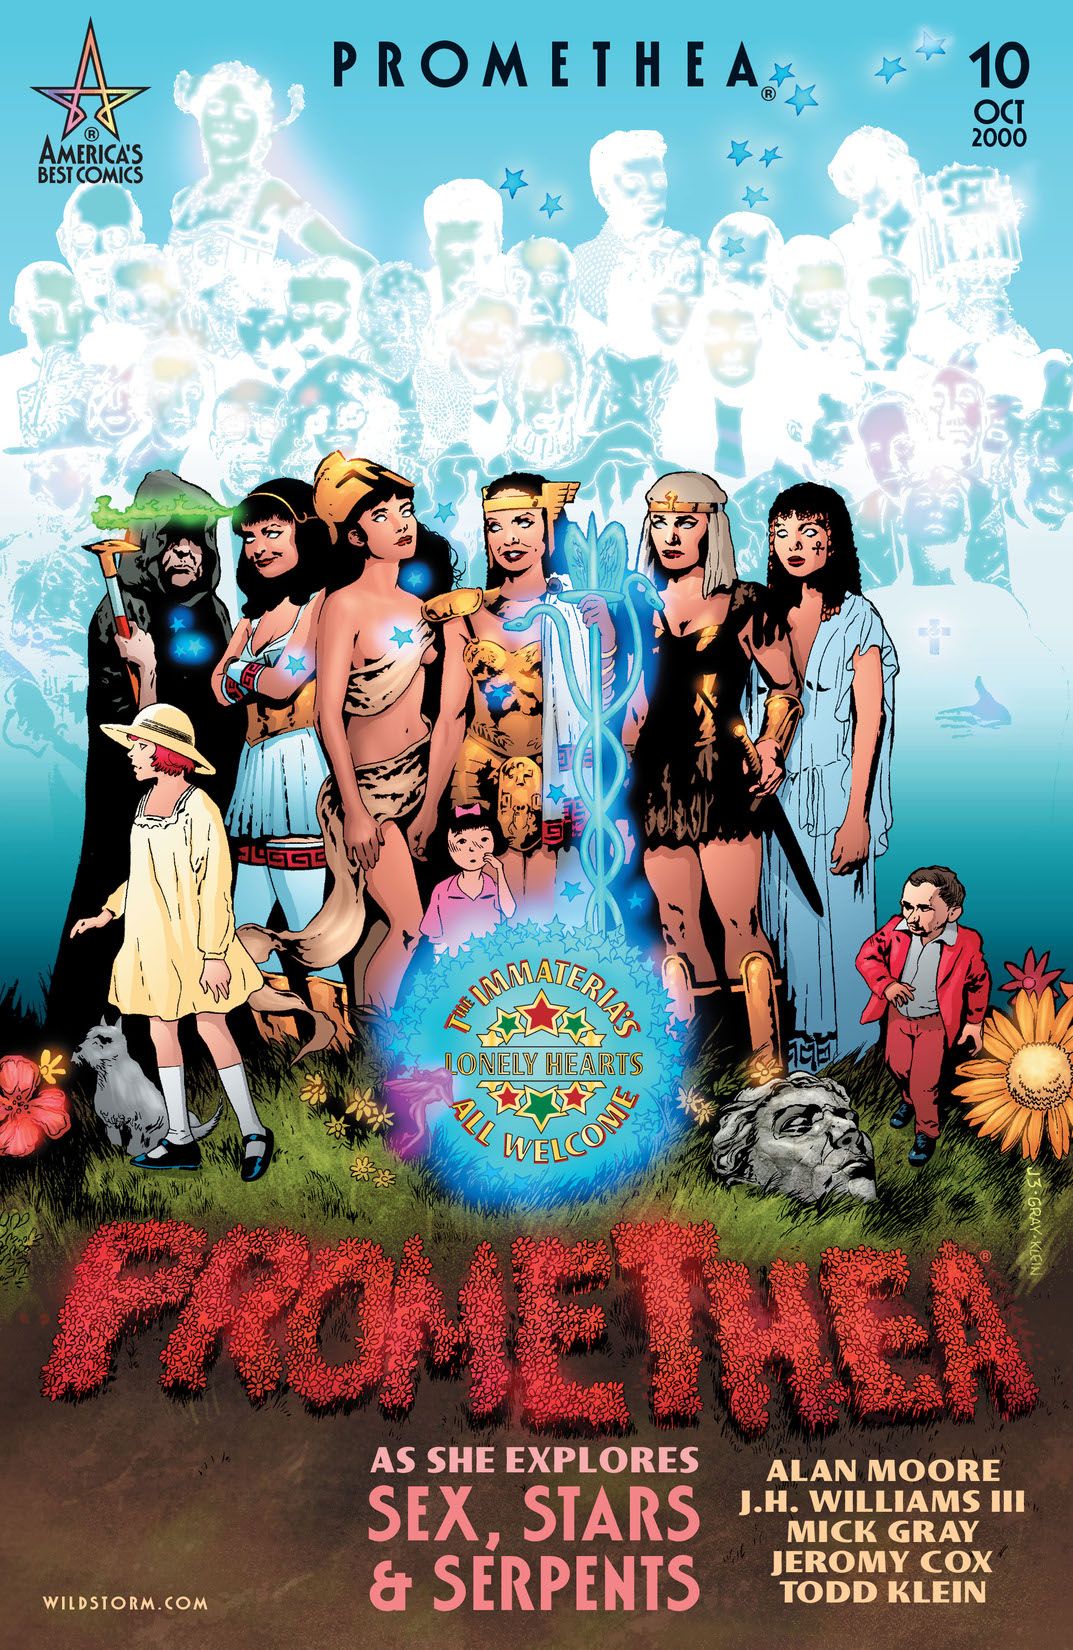 The cover of Promethea #10